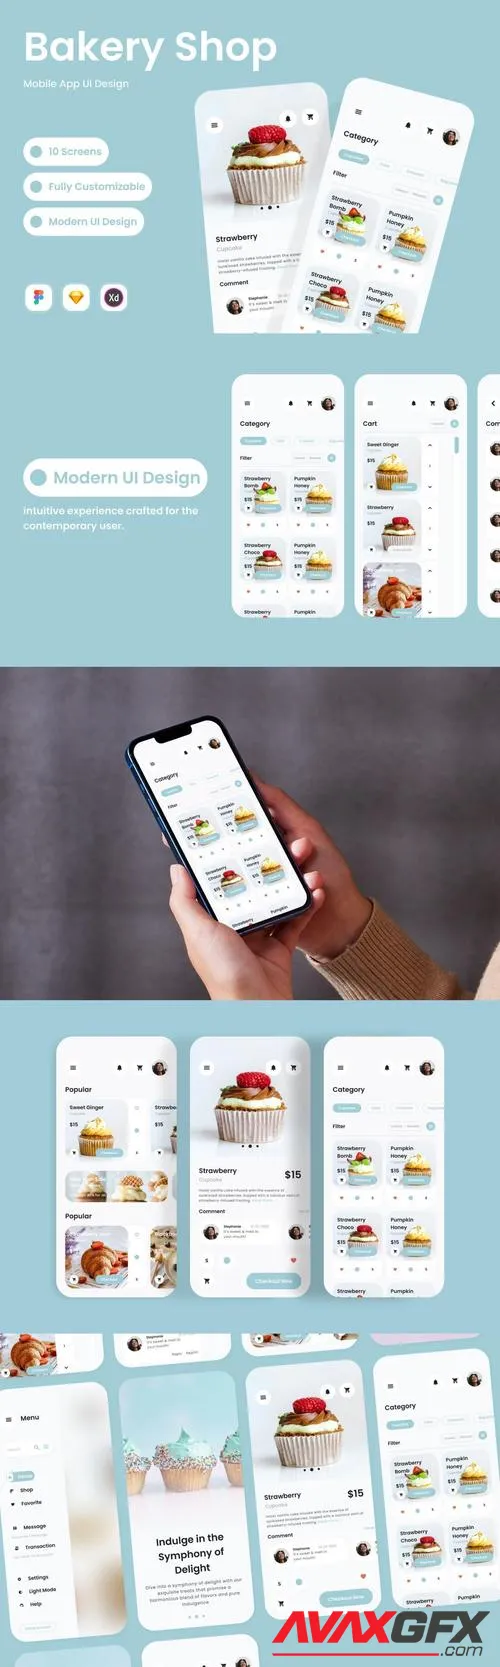 OvenJoy - Bakery Shop Mobile App